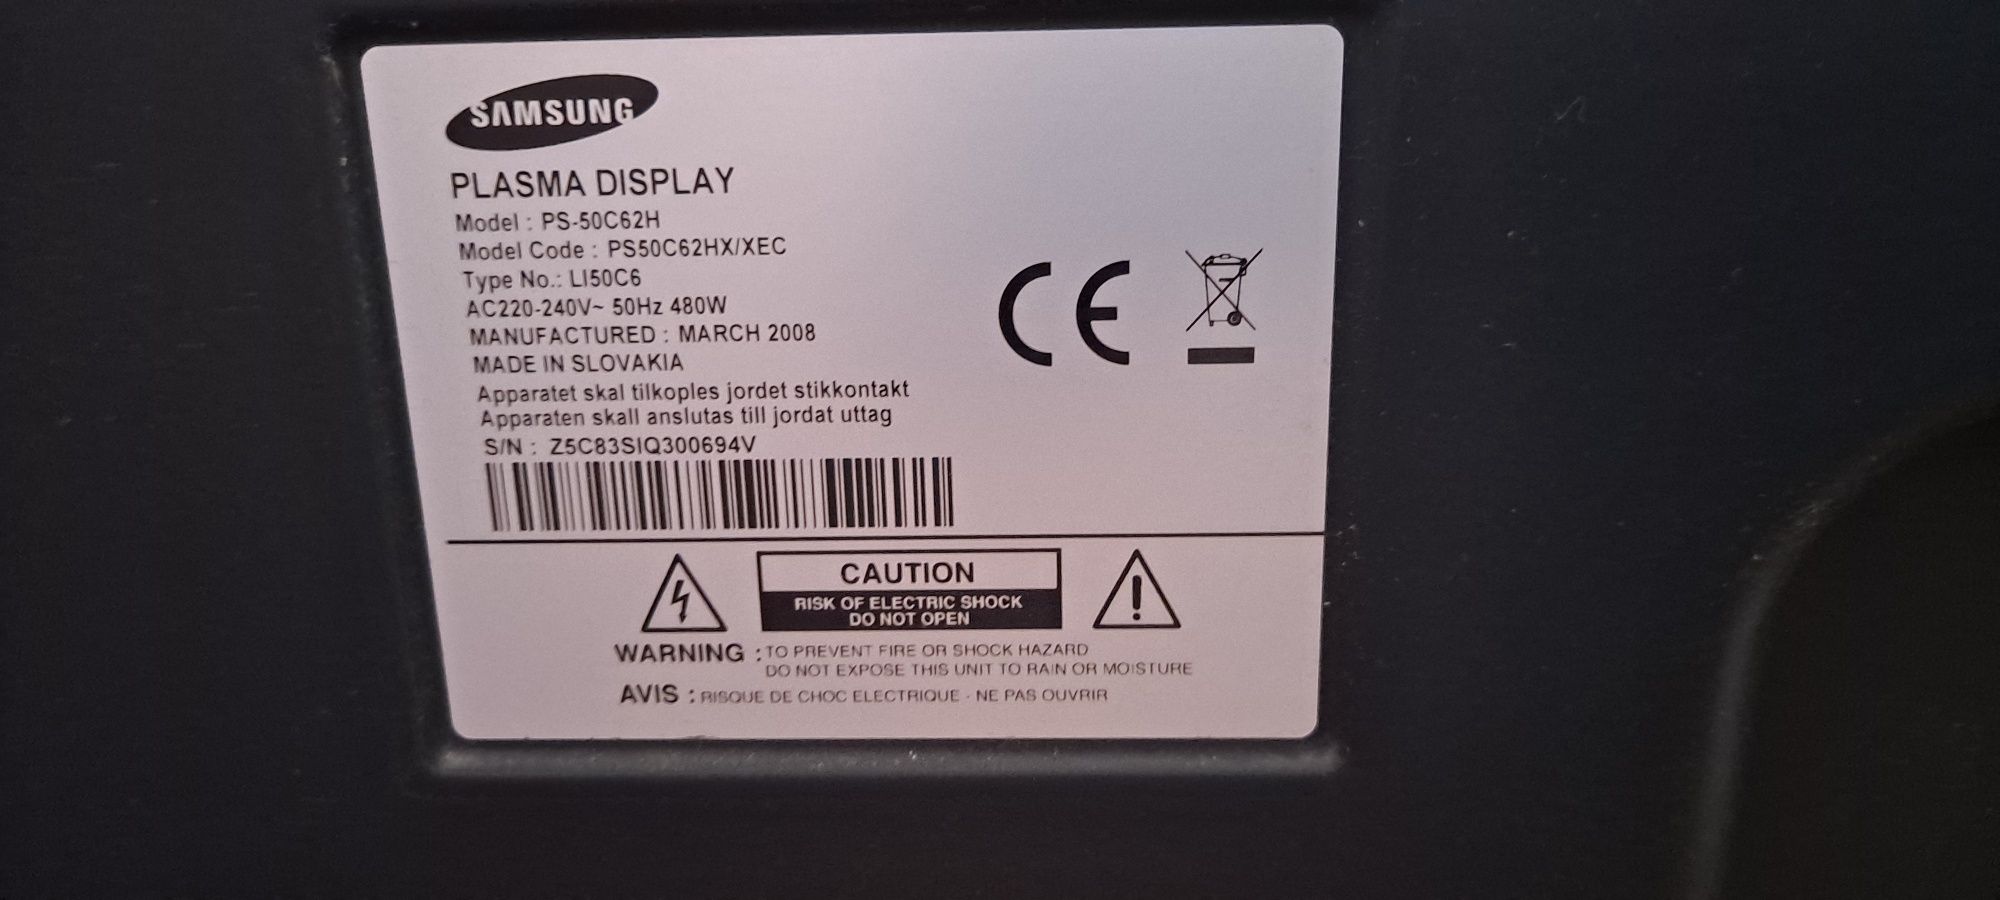 Telewizor Samsung Plasma PS50C62H 50 cali